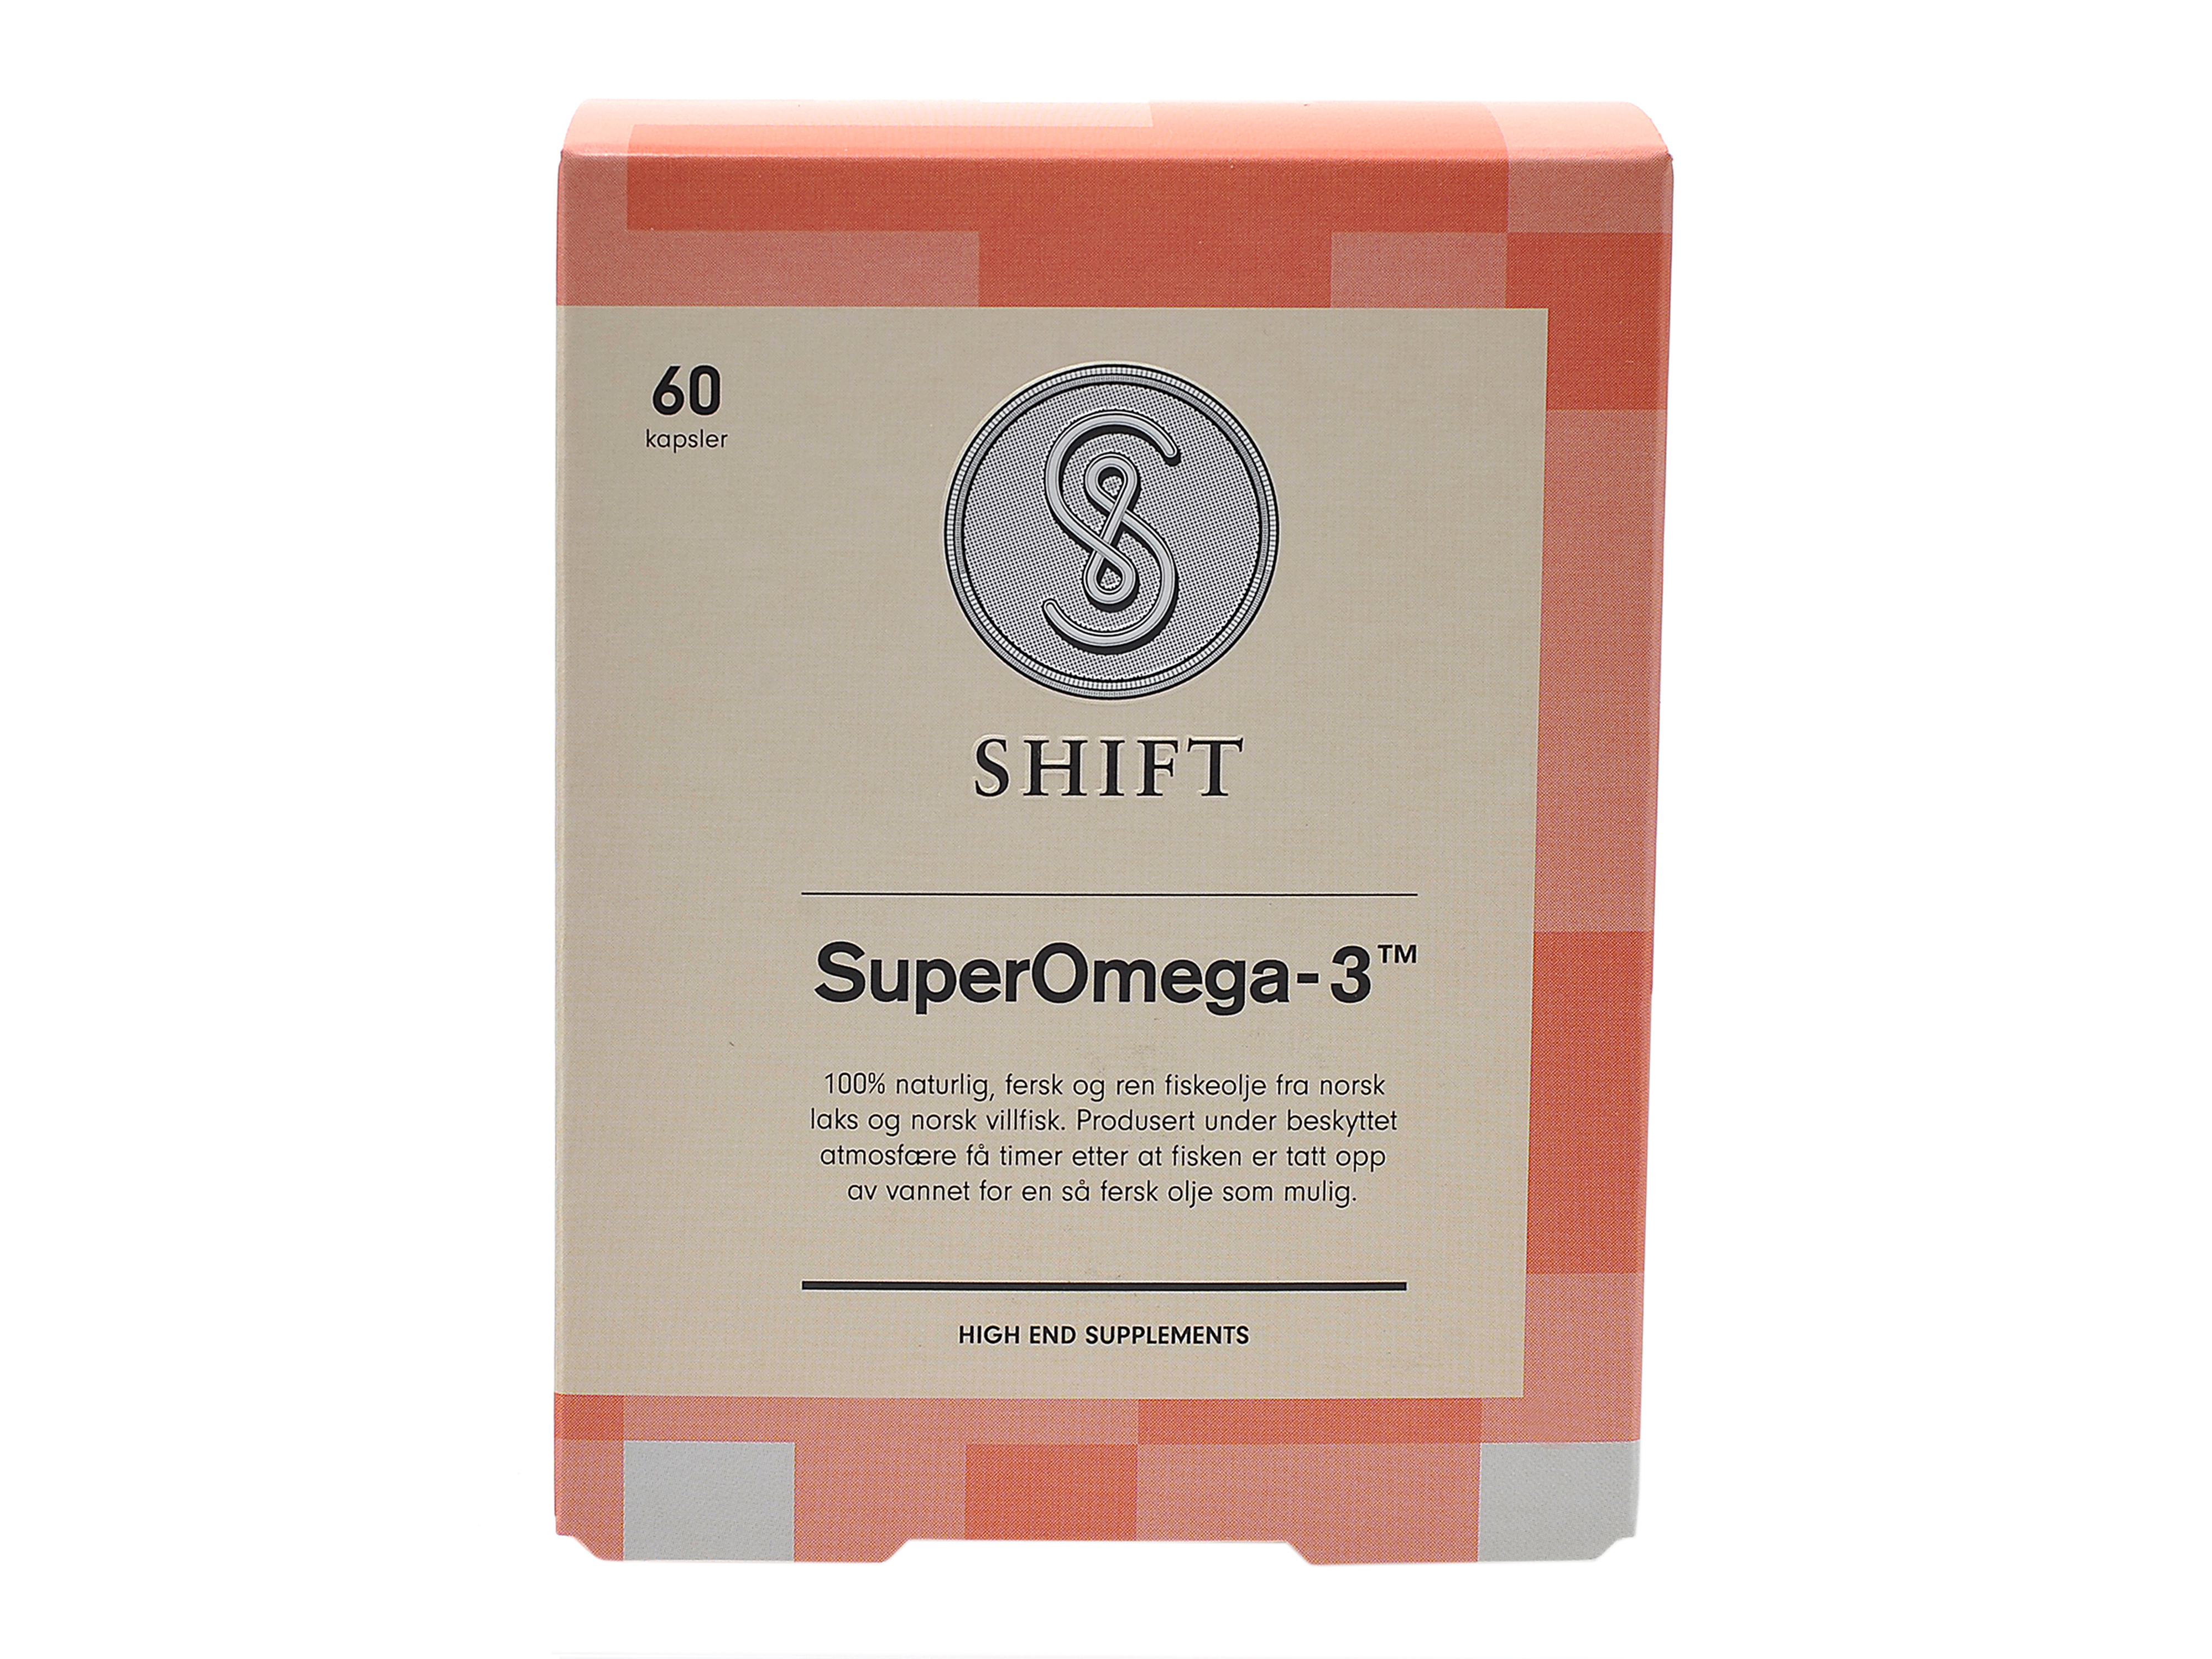 SHIFT SuperOmega-3 Kapsler, 60 stk.